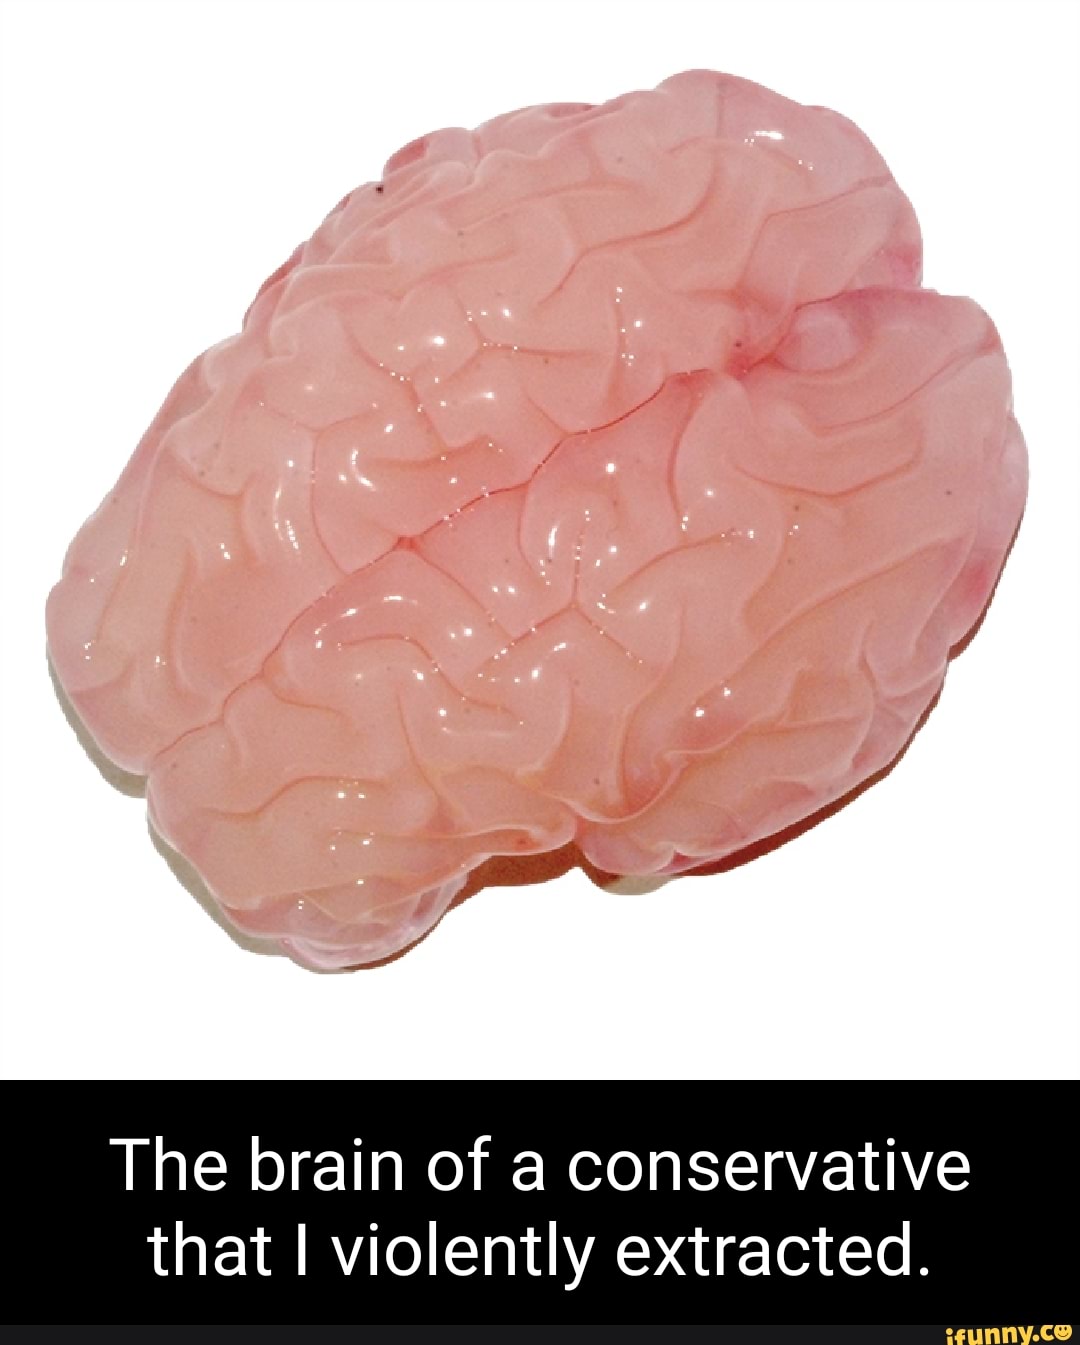 Brain цены. Натовщий мозг человека.